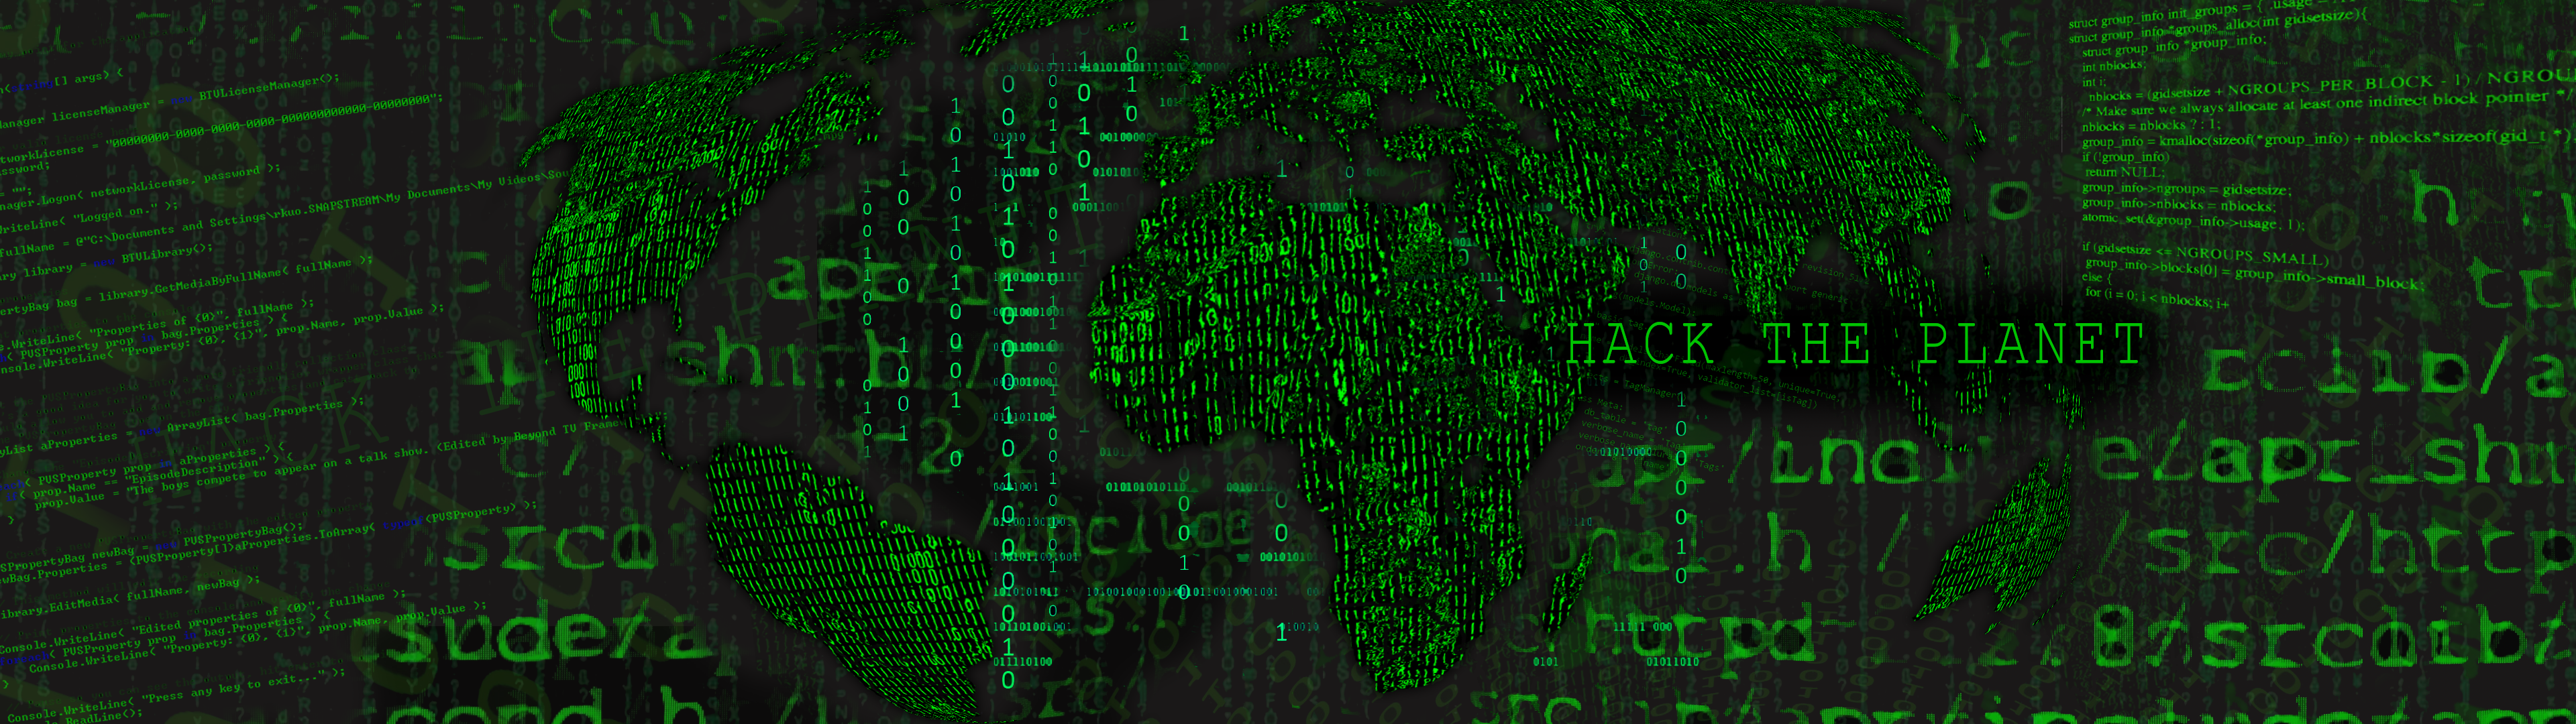 Hack the Planet Wallpaper. Dot Hack Wallpaper, Hack Planet Wallpaper and Hack Roots Wallpaper